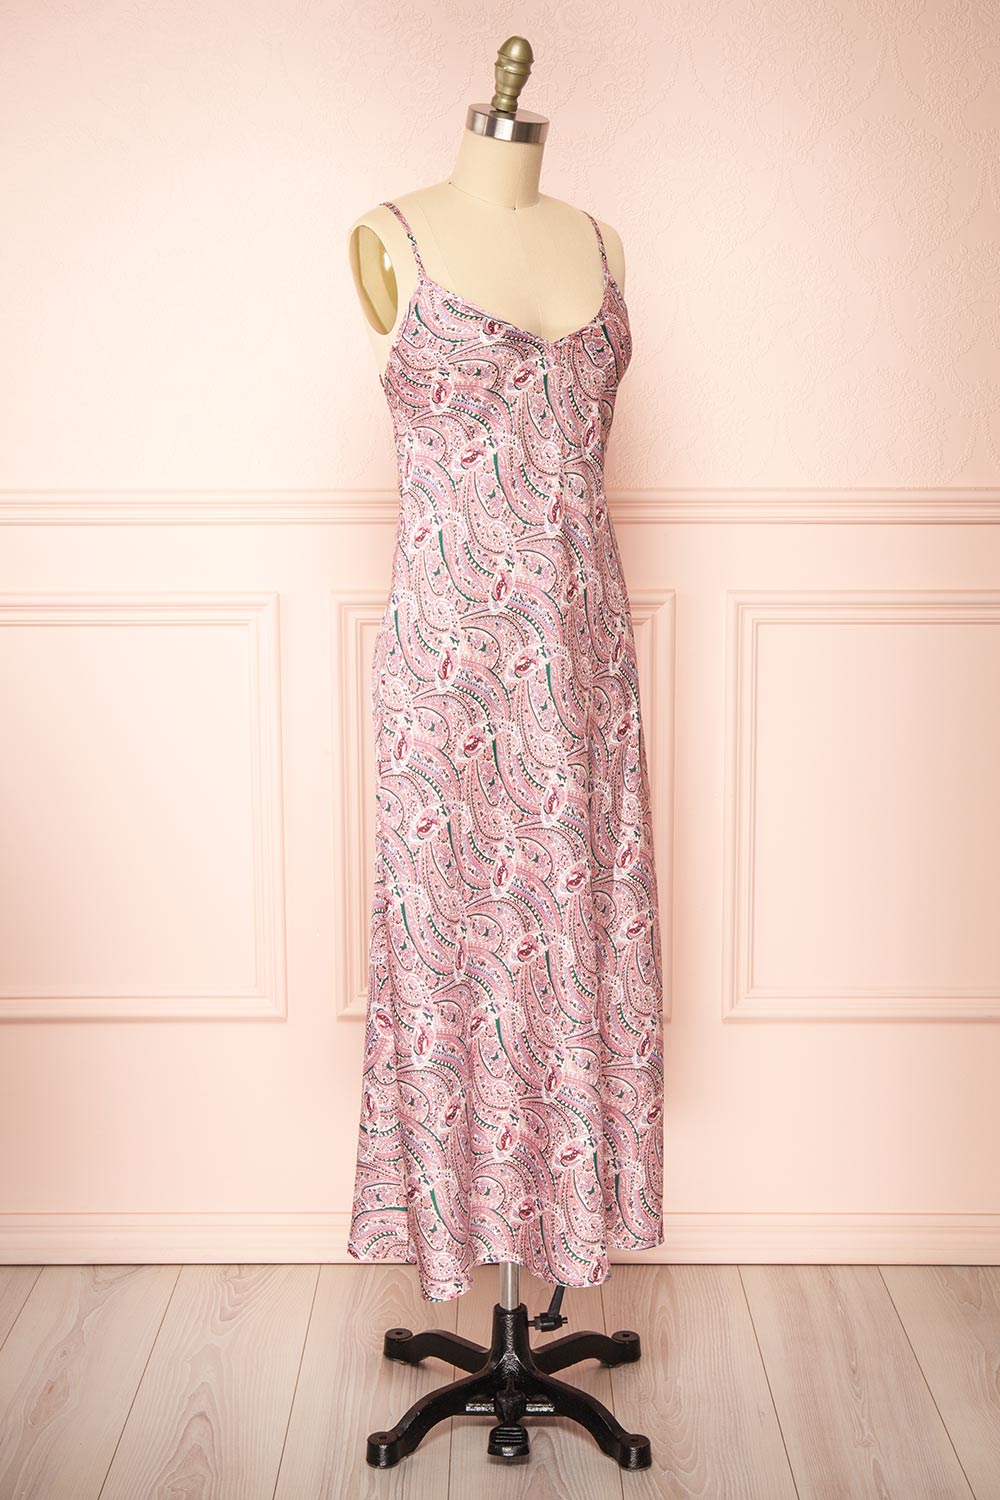 Kiute Paisley Print Midi Dress w/ Tie-Back | Boutique 1861 sid eview